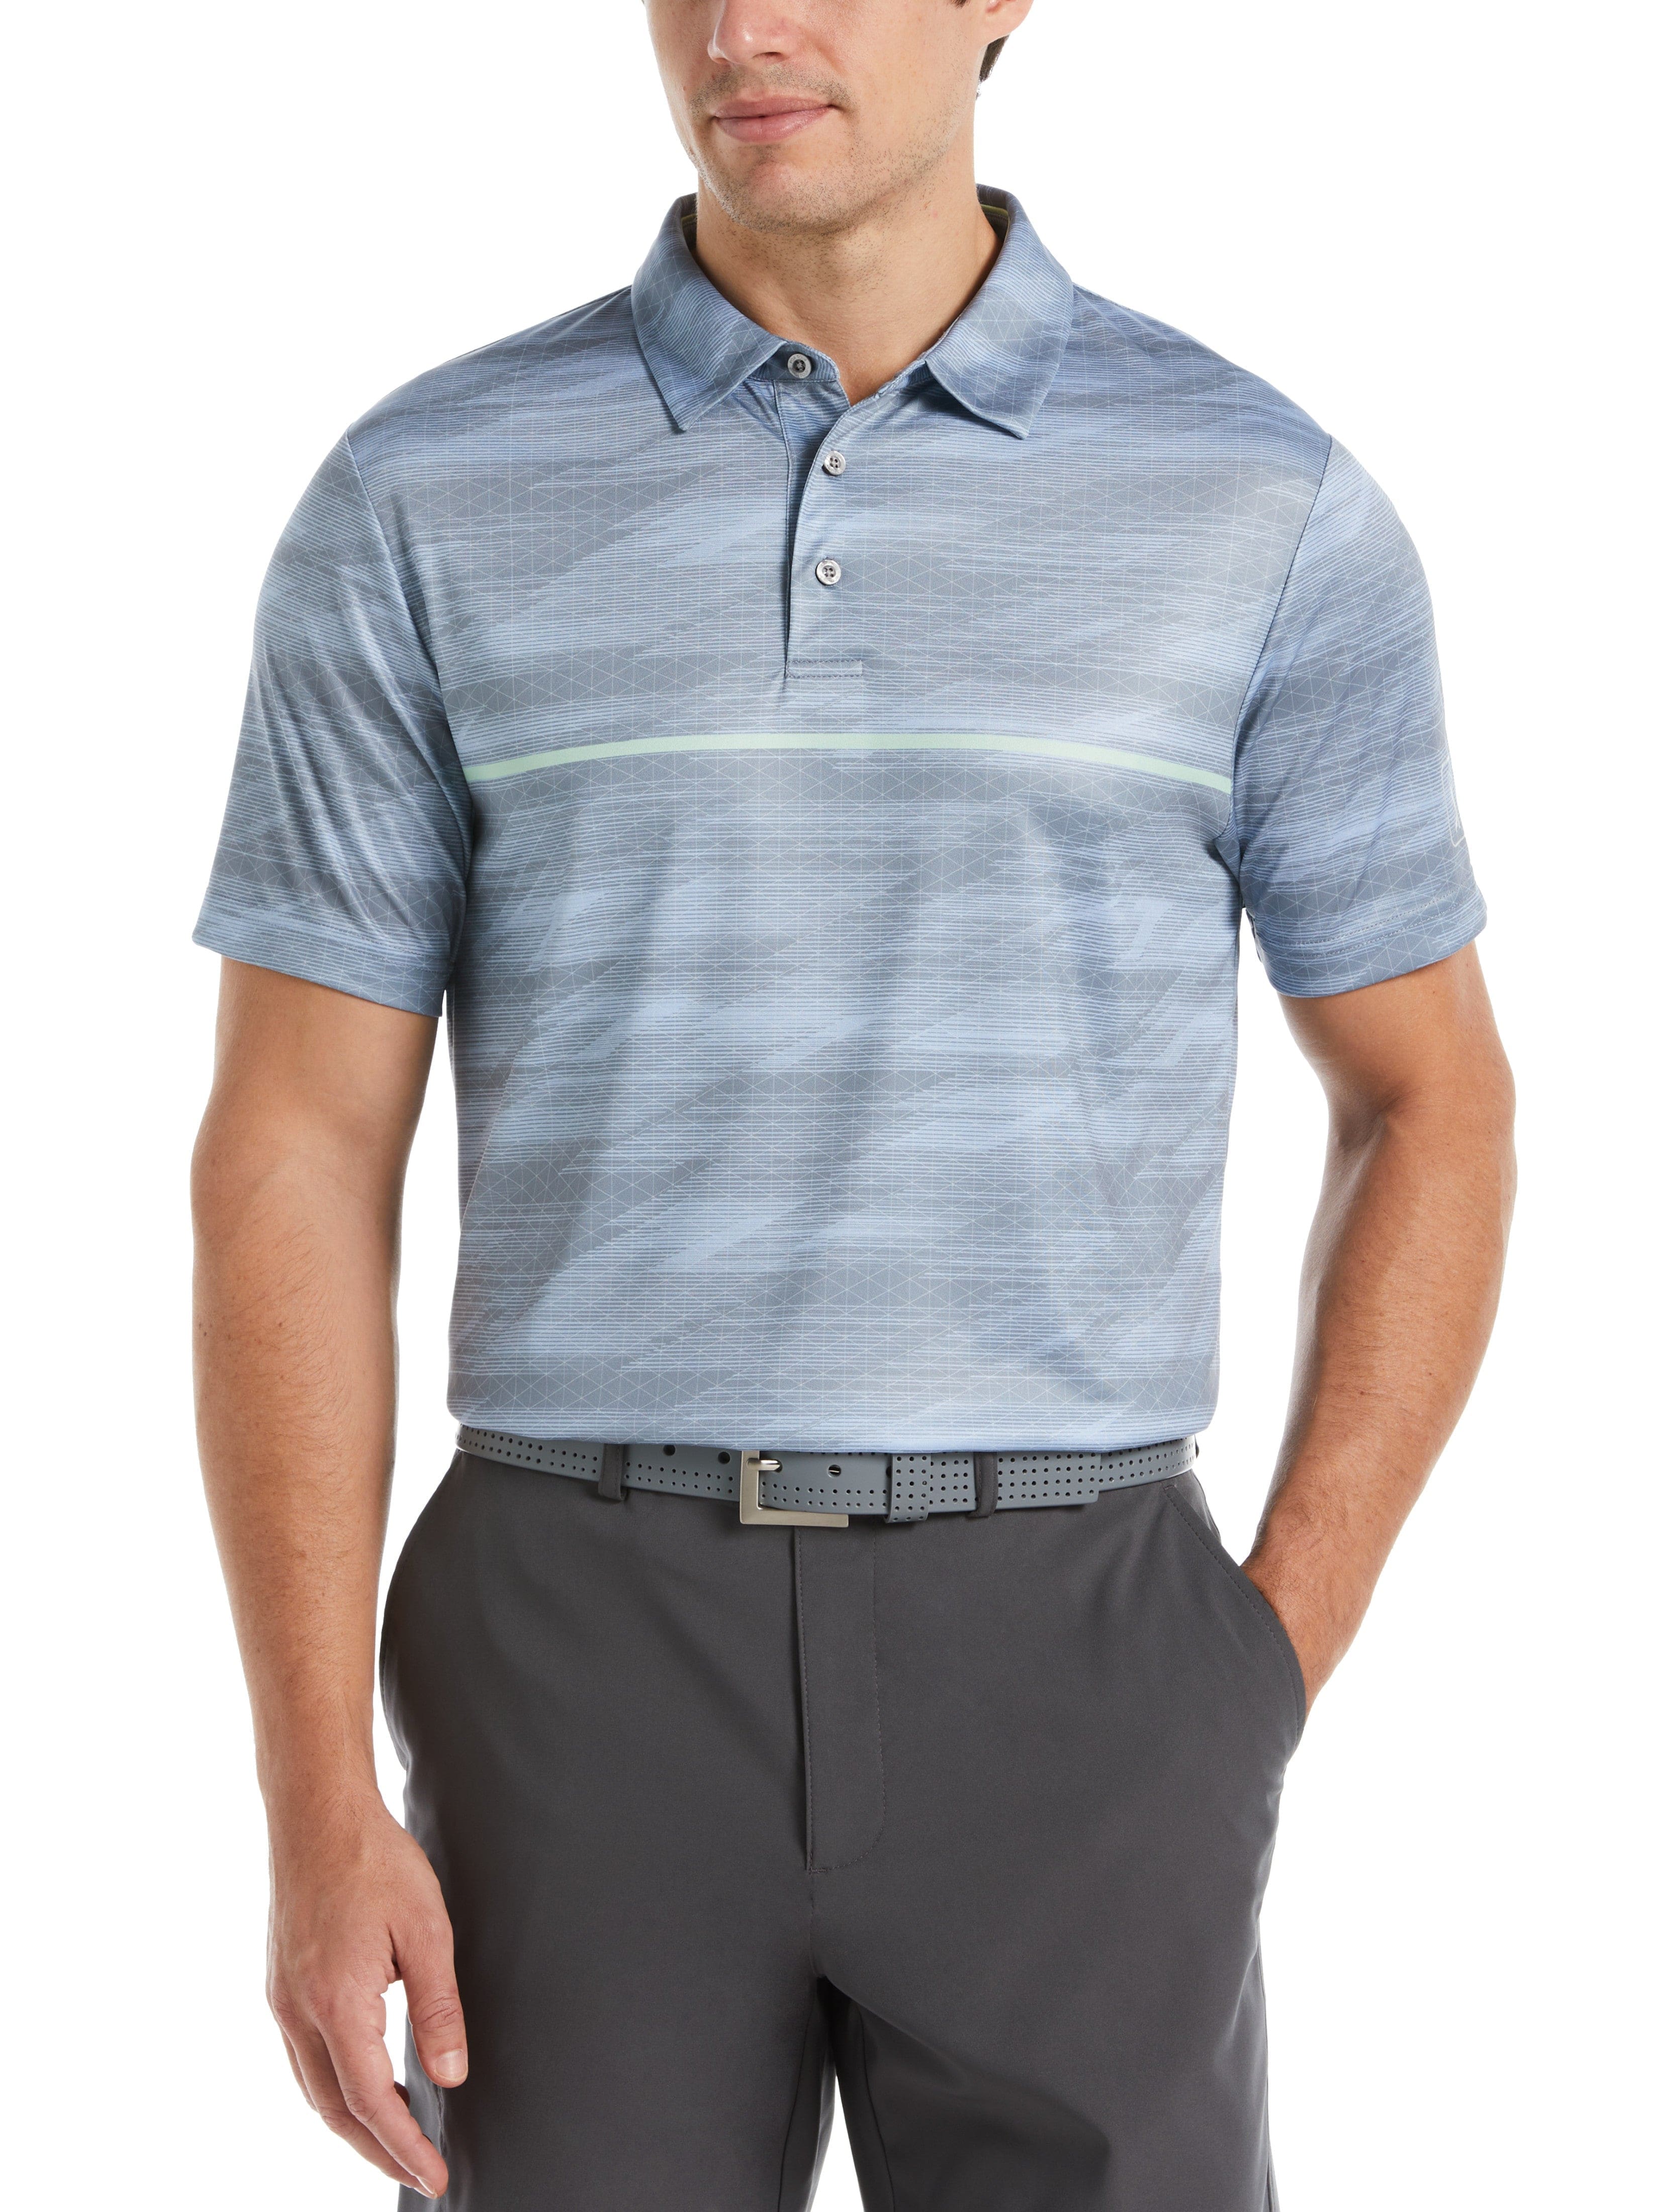 PGA TOUR Apparel Mens Digitized Chest Stripe Print Golf Polo Shirt, Size Medium, Tradewinds Gray, 100% Polyester | Golf Apparel Shop